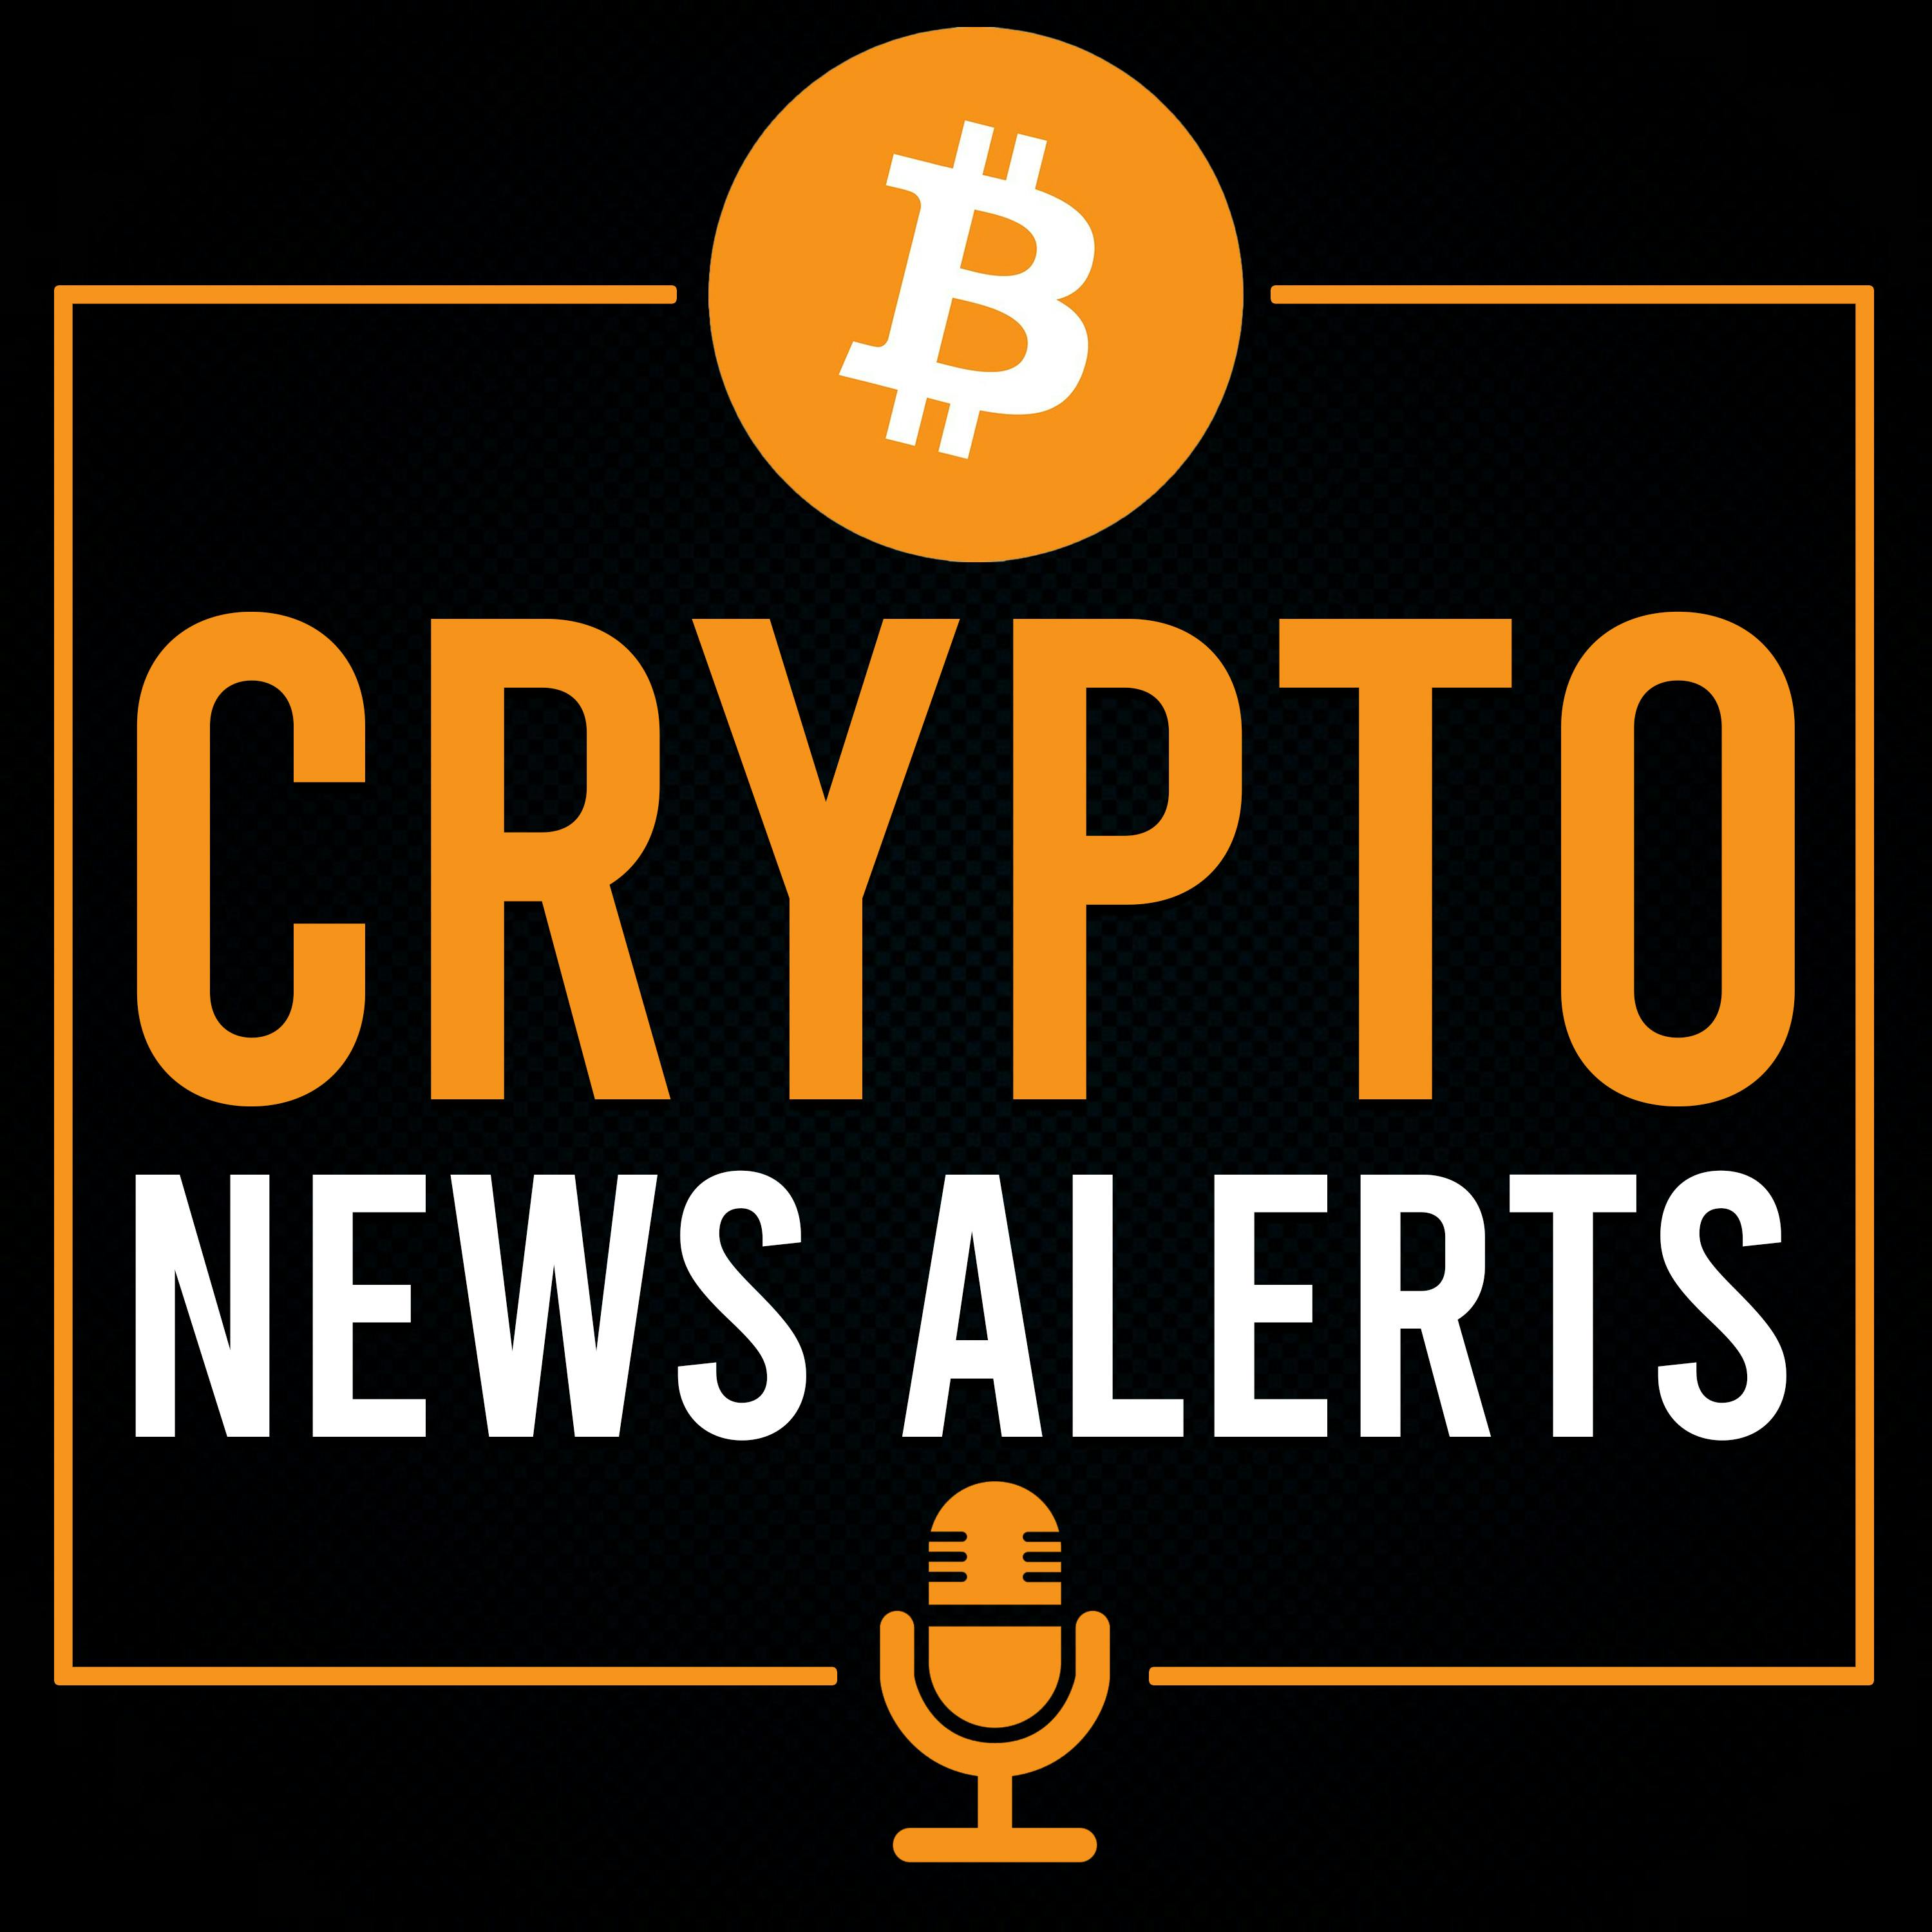 1609: “$1,000,000 Bitcoin in Play, Abu Dhabi & Saudis ALL-IN” - Max Keiser